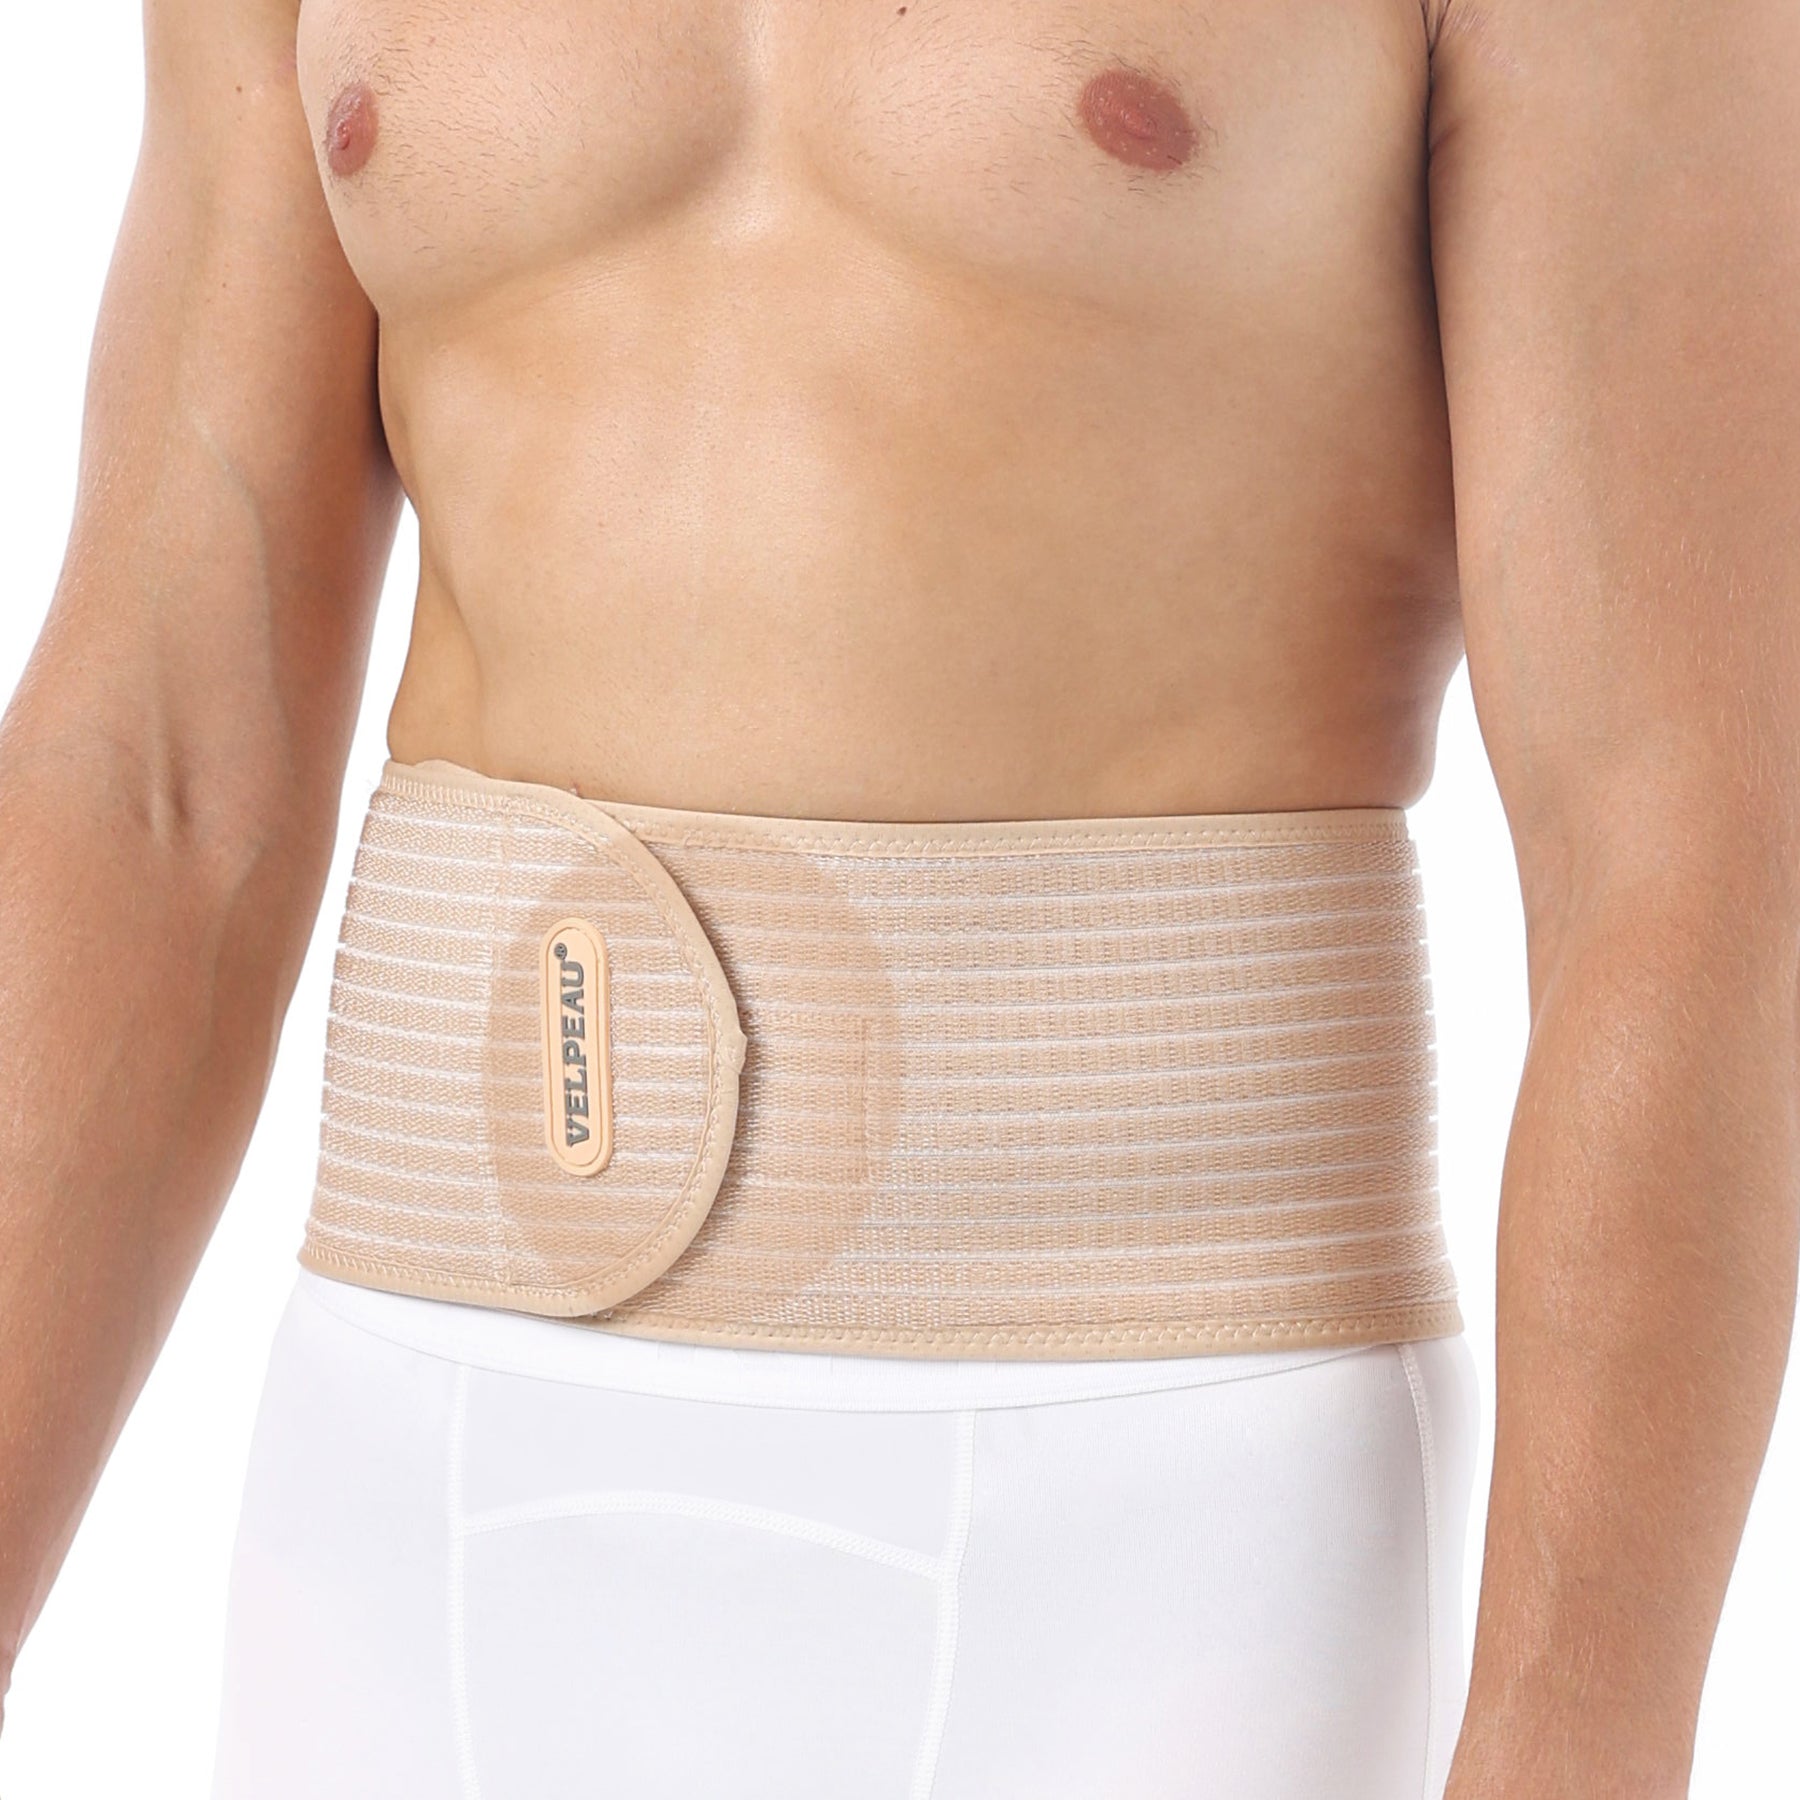  Umbilical hernia belt for men. Umbilical hernia belt